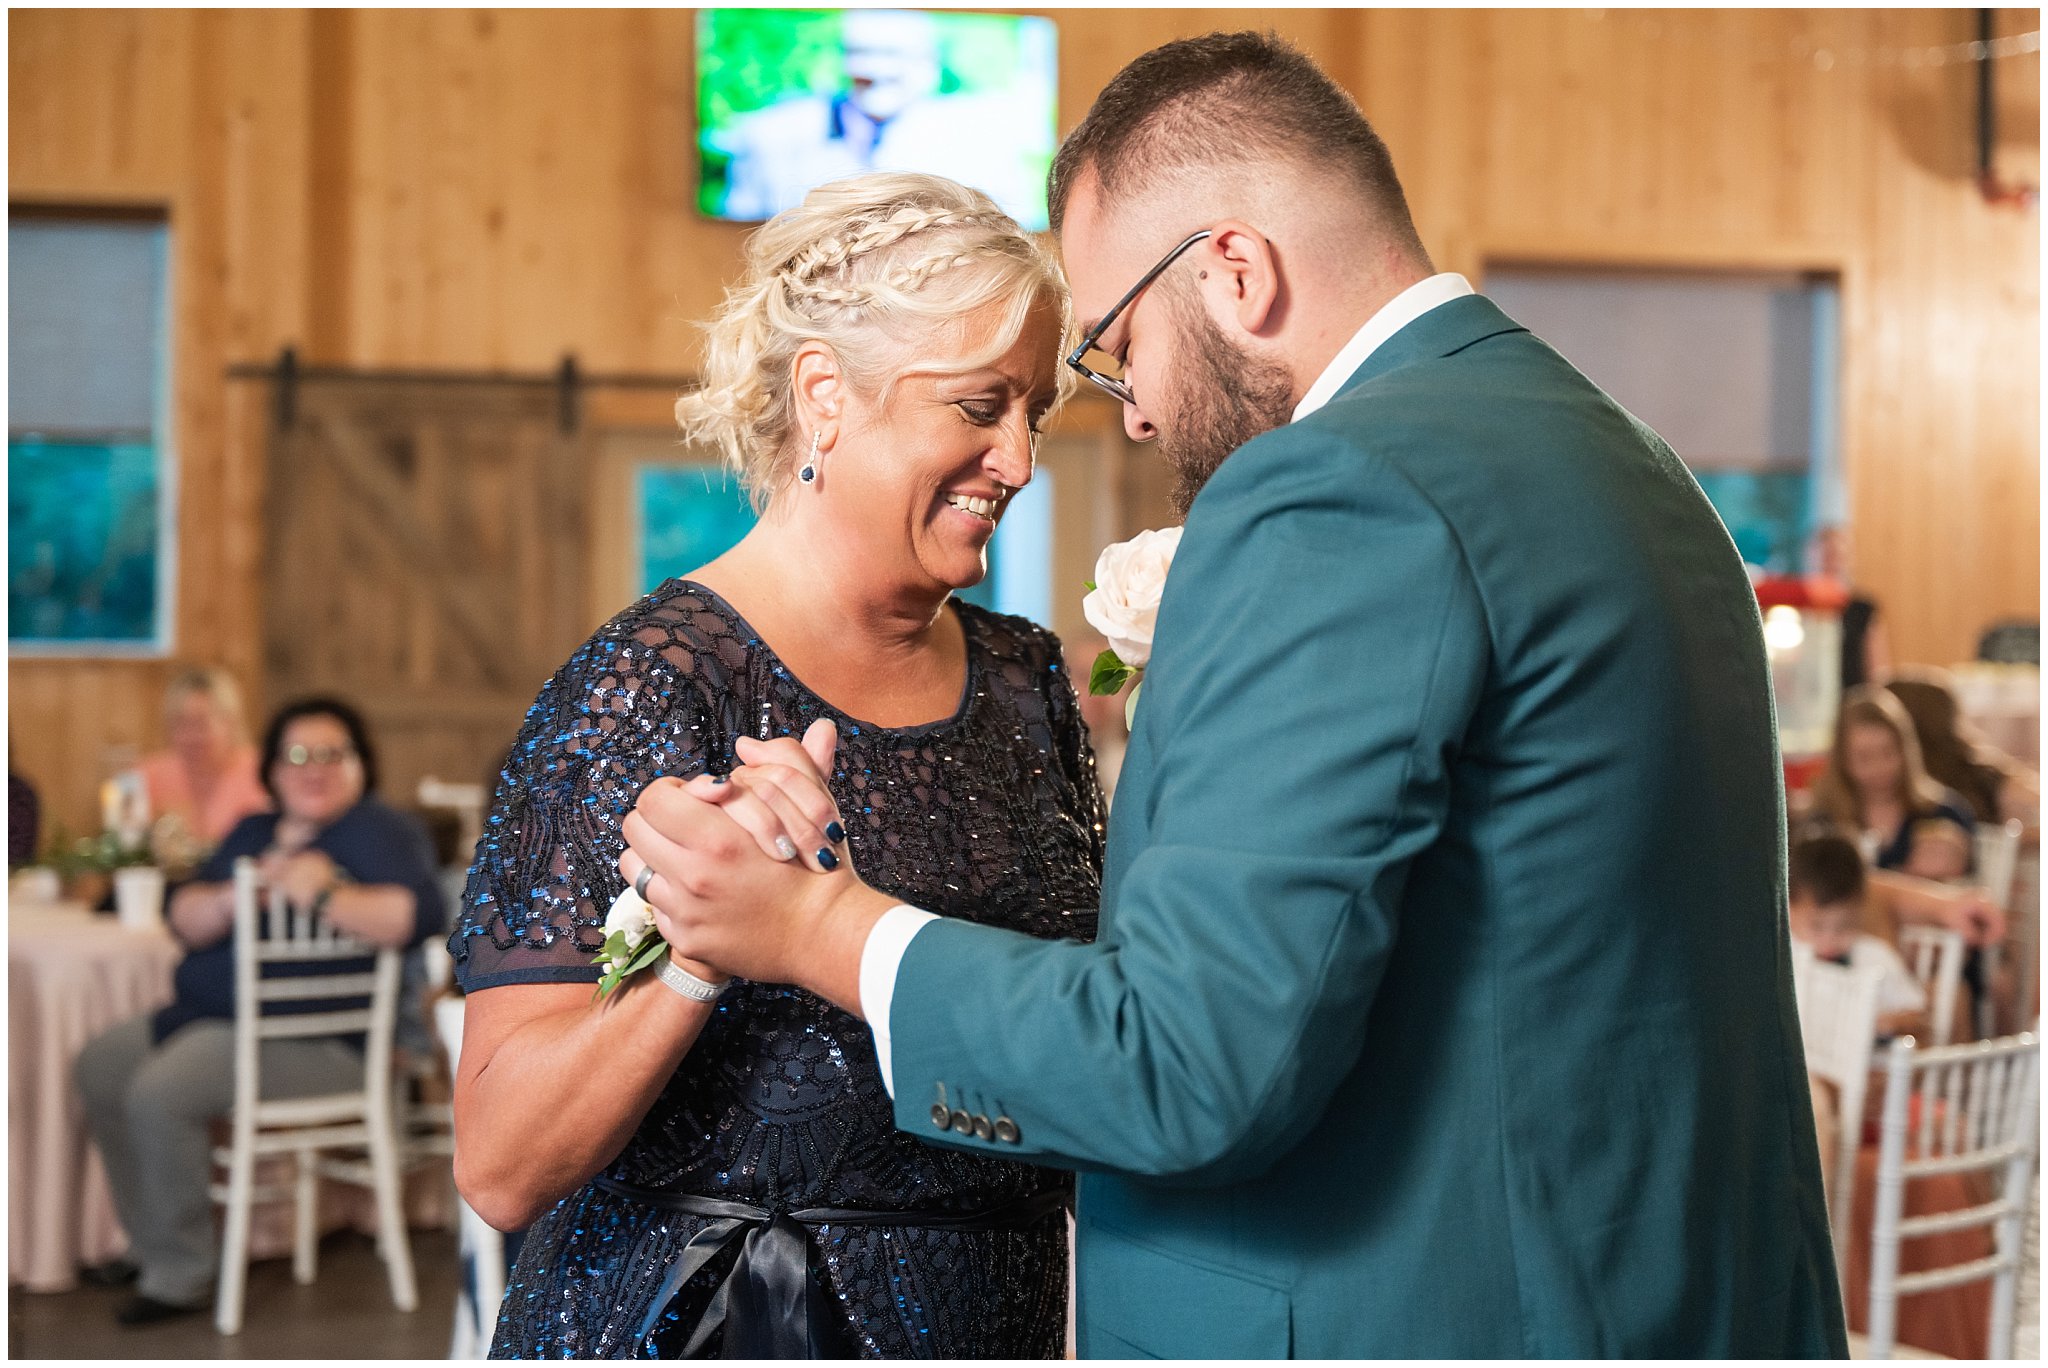 Dancing inside barn | Green and Salmon Pink Utah Wedding | Oak Hills | Jessie and Dallin Photography